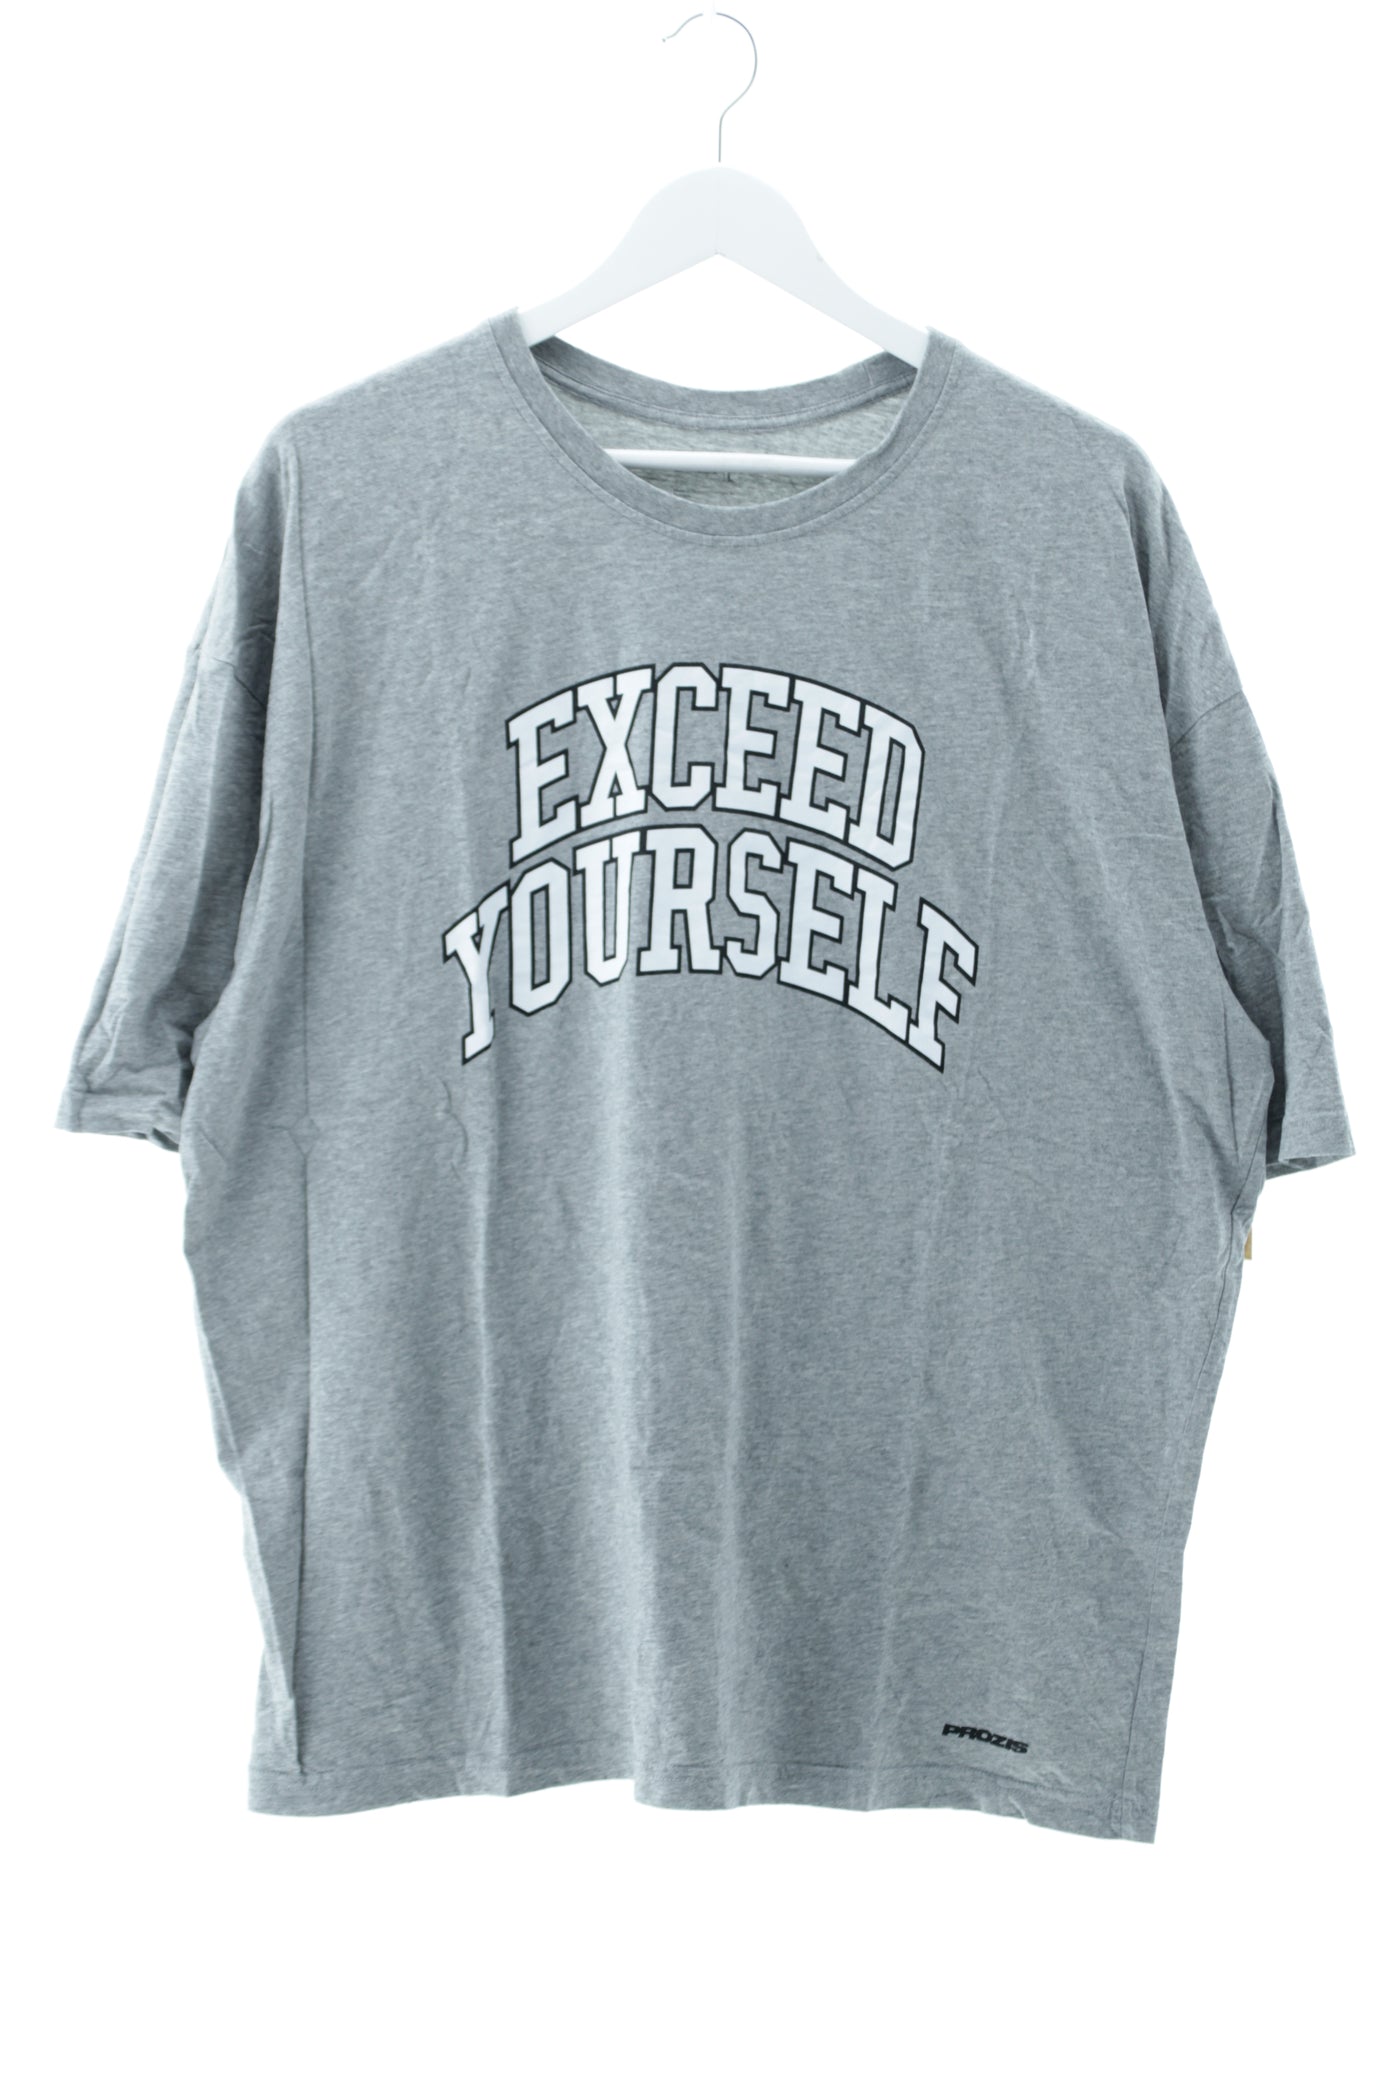 Camiseta cris "Exceed yourself"